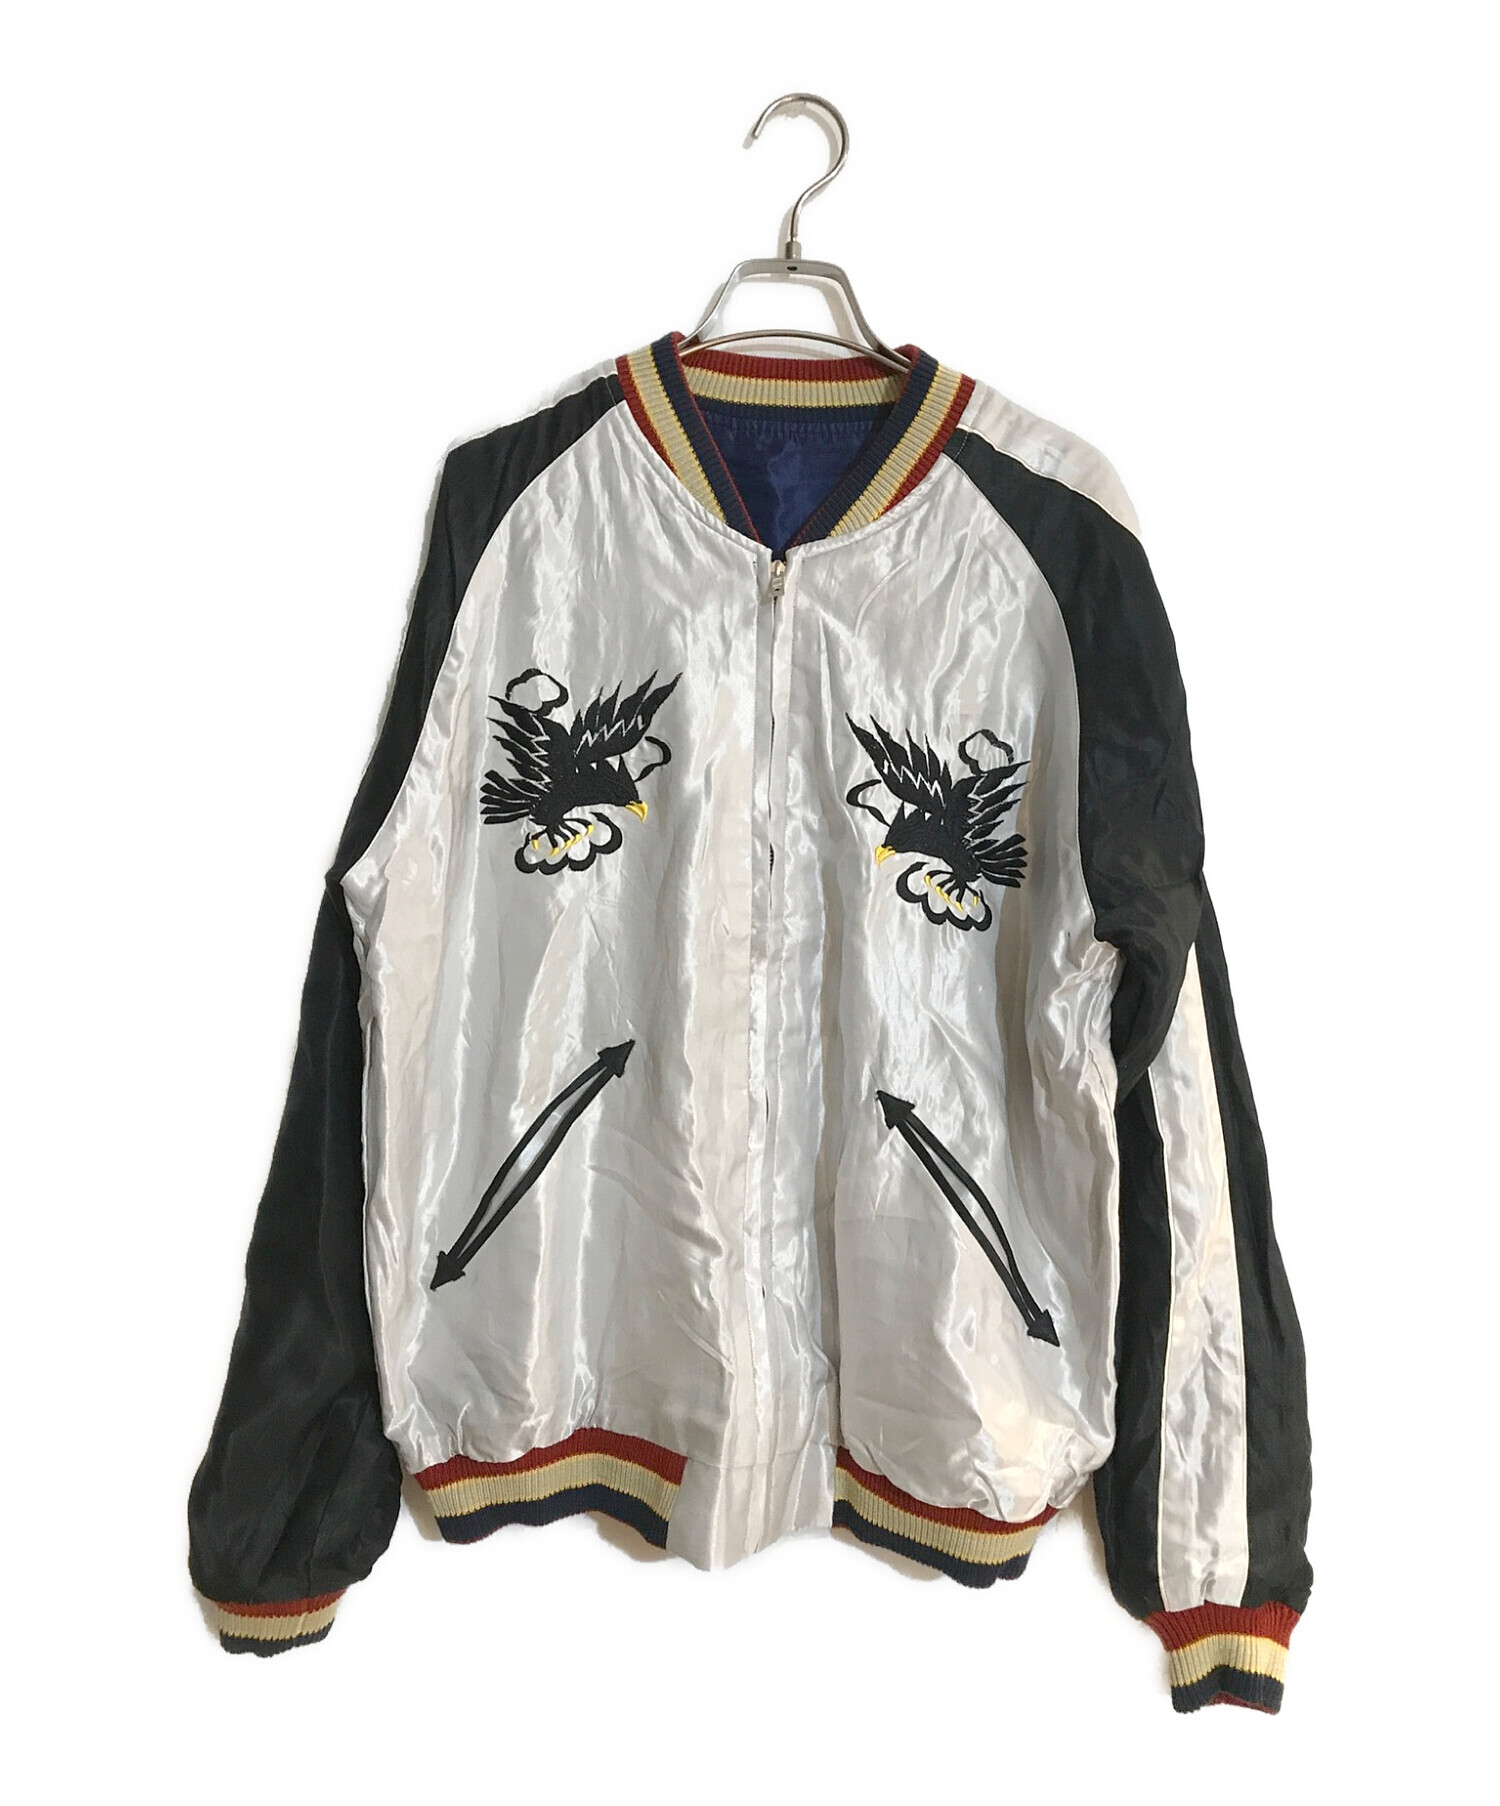 TAILOR TOYO (テーラー東洋) Early 1950s Style Acetate Souvenir Jacket “EAGLE” ×  “DRAGON & TIGER” ネイビー サイズ:SIZE L